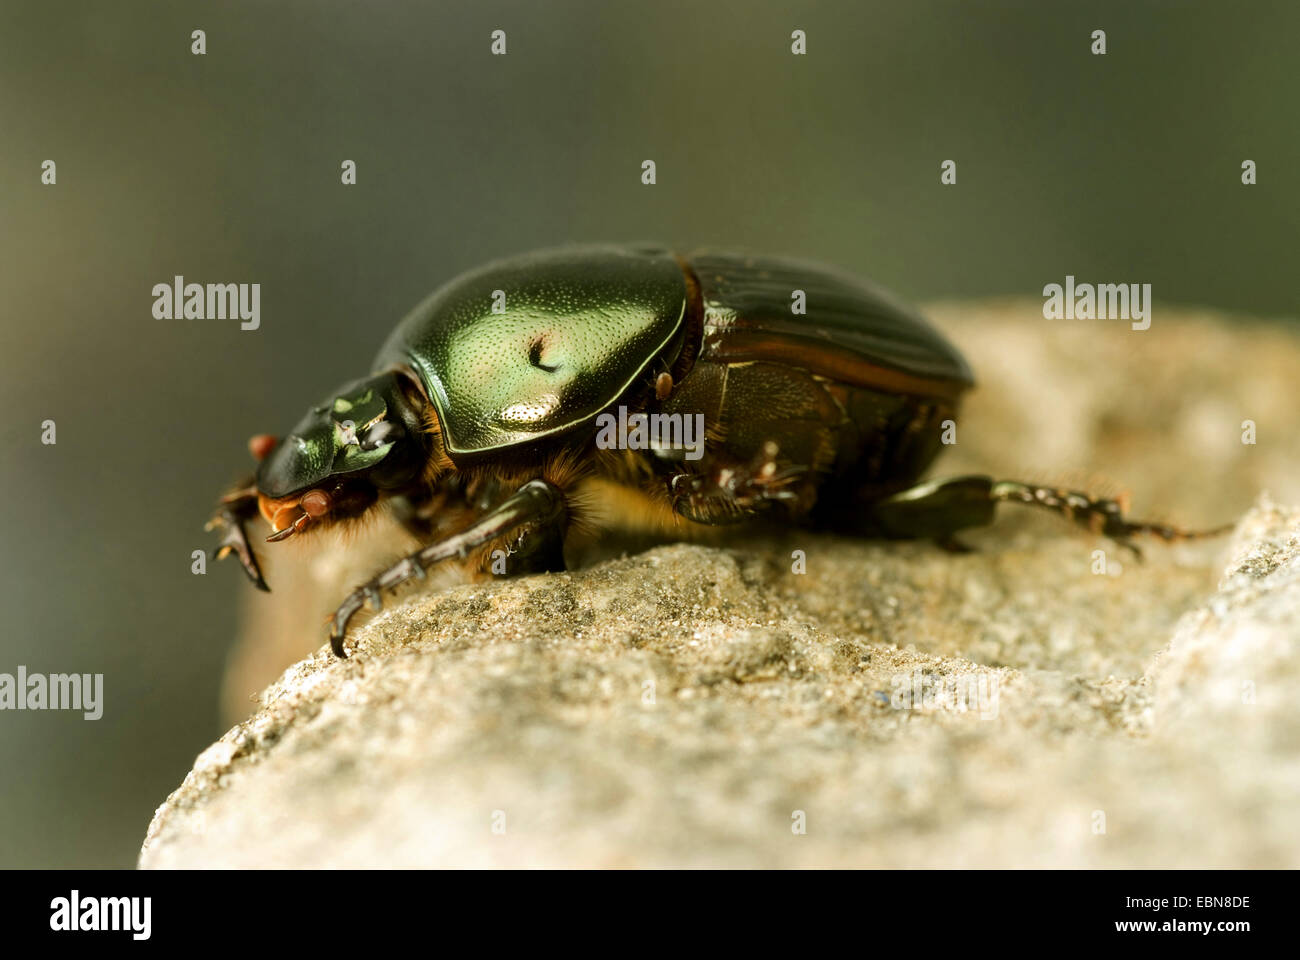 Scarabeo sacro beetle, scarabeo egizio (Scarabaeus sacer), vista laterale Foto Stock